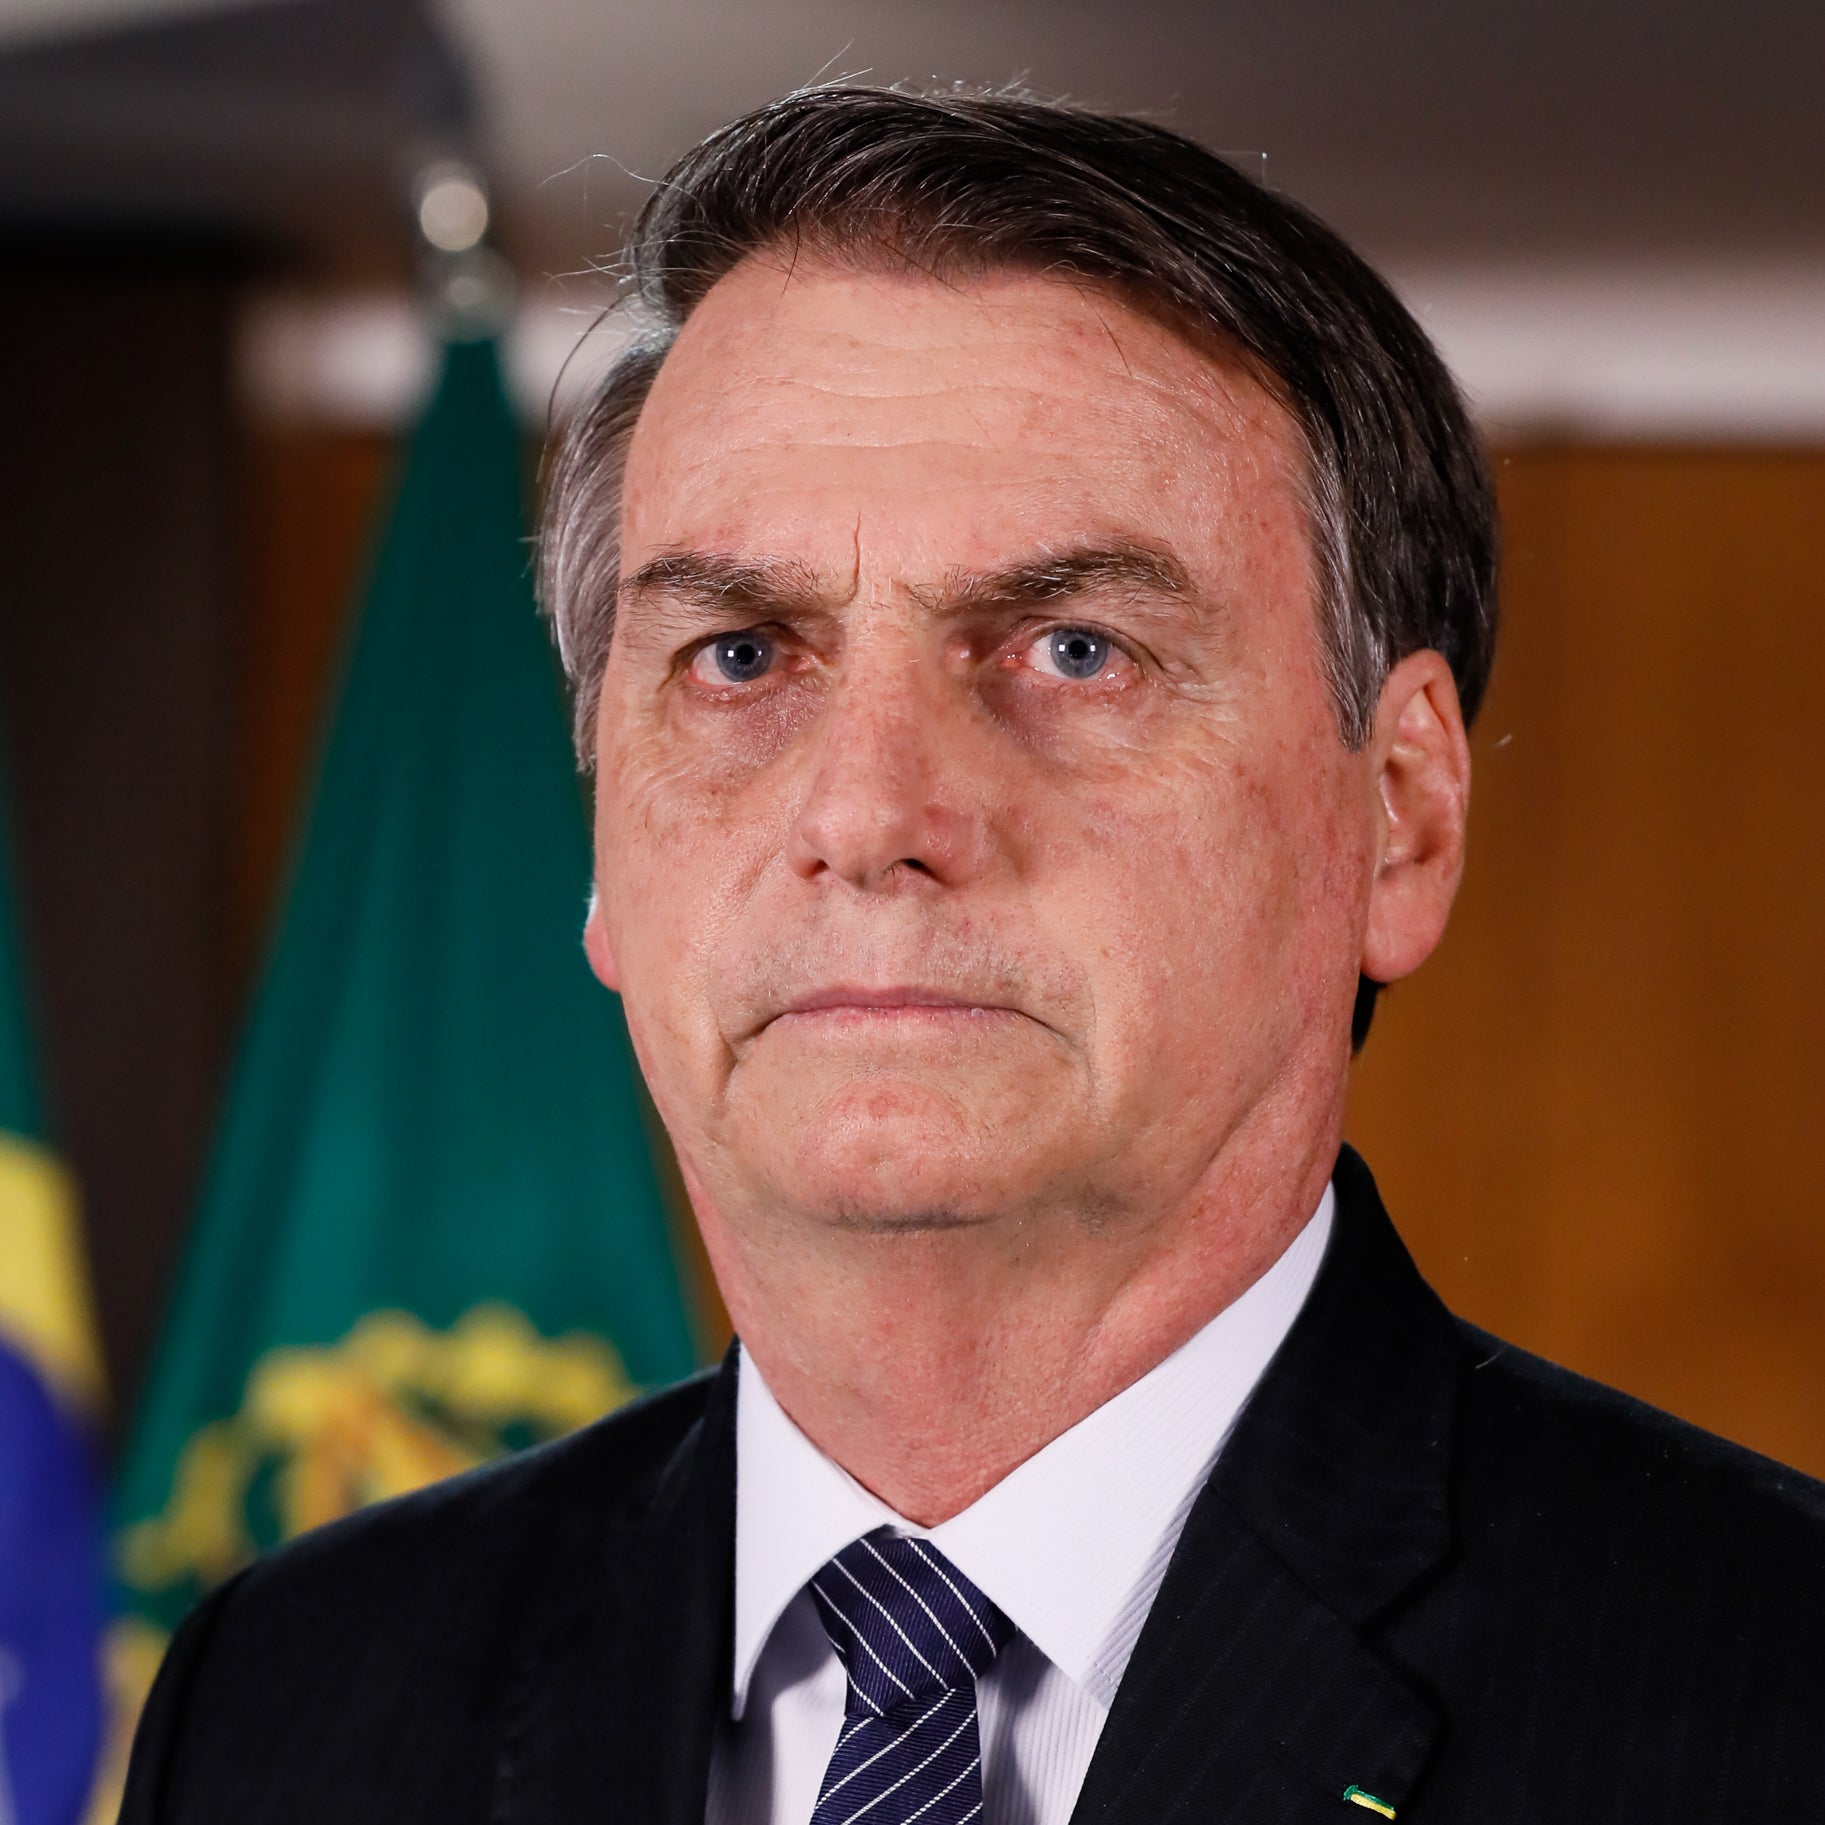 Bolsonaro stares at the camera with a sort of serious but hangdog expression.